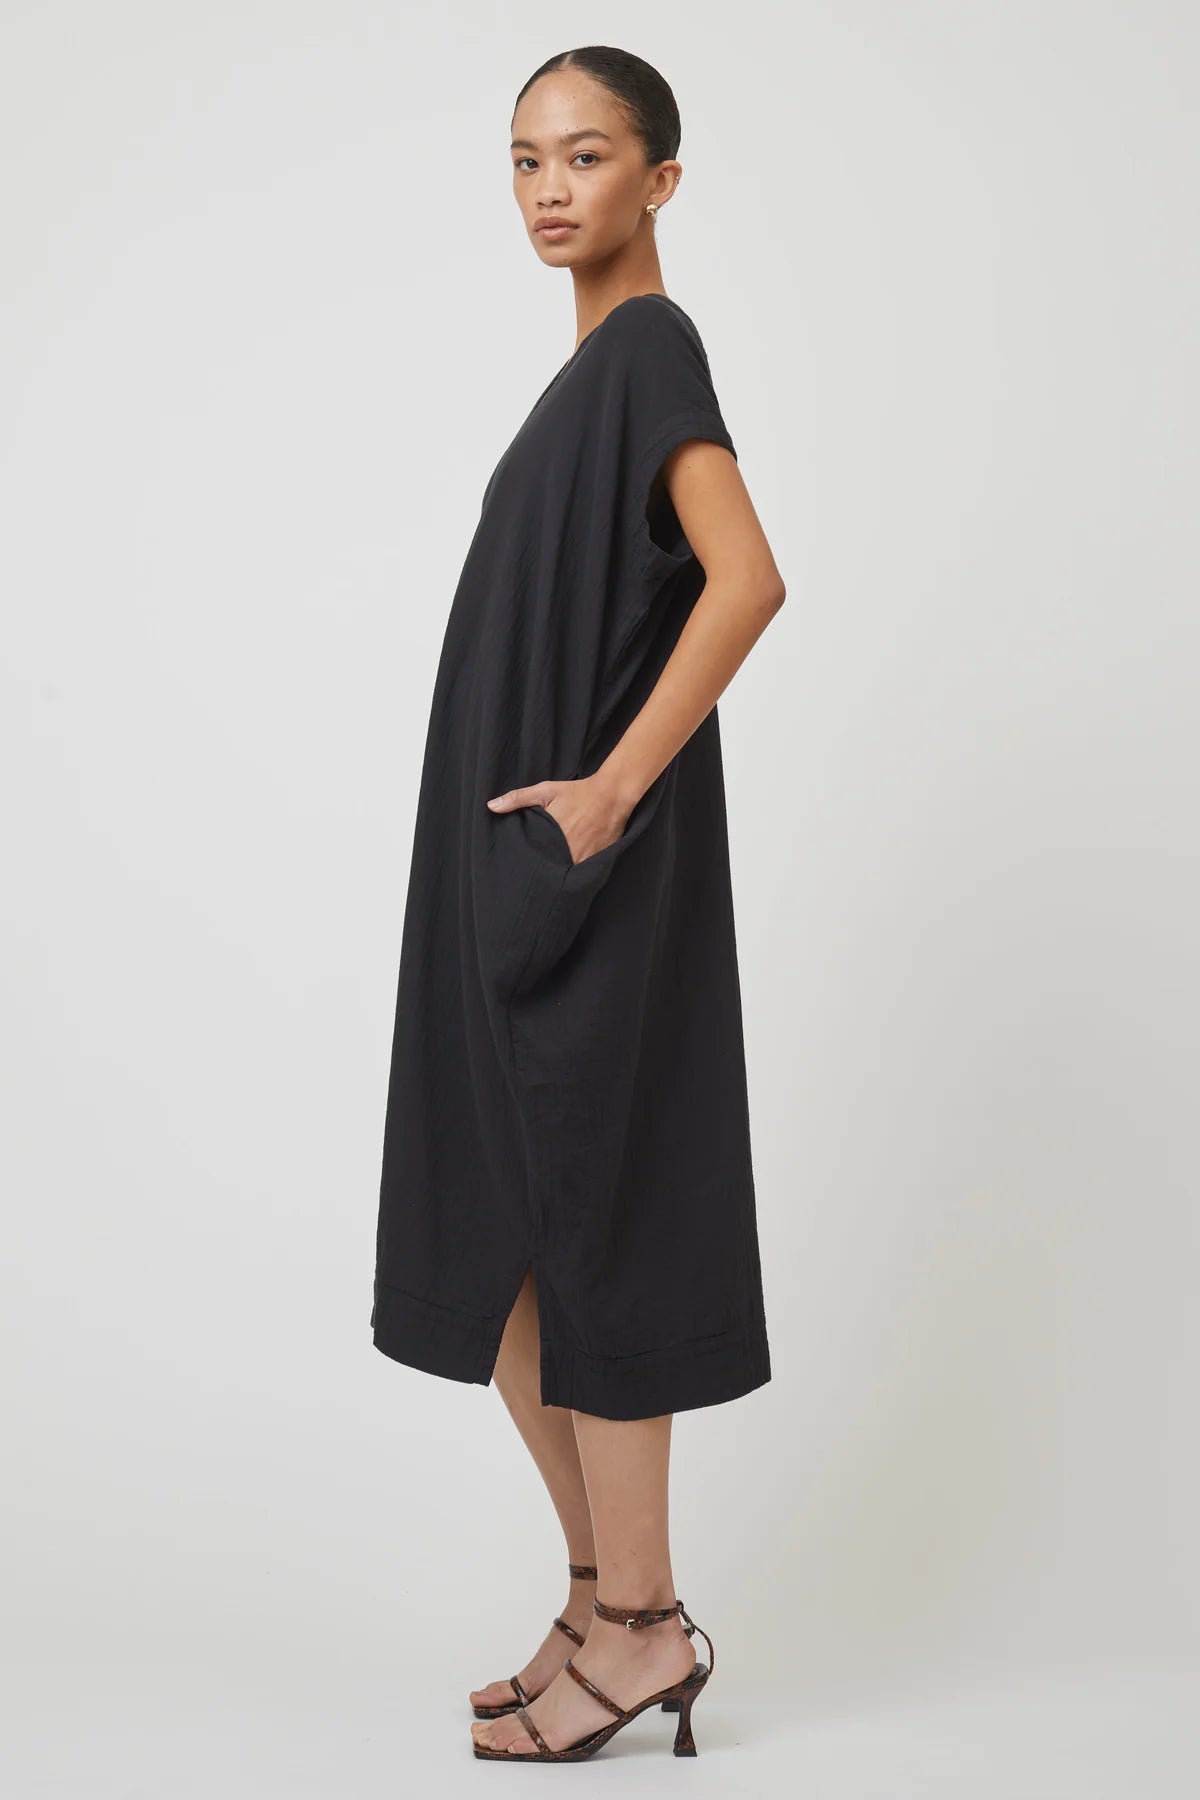 Atelier Delphine Crescent Long Dress in black